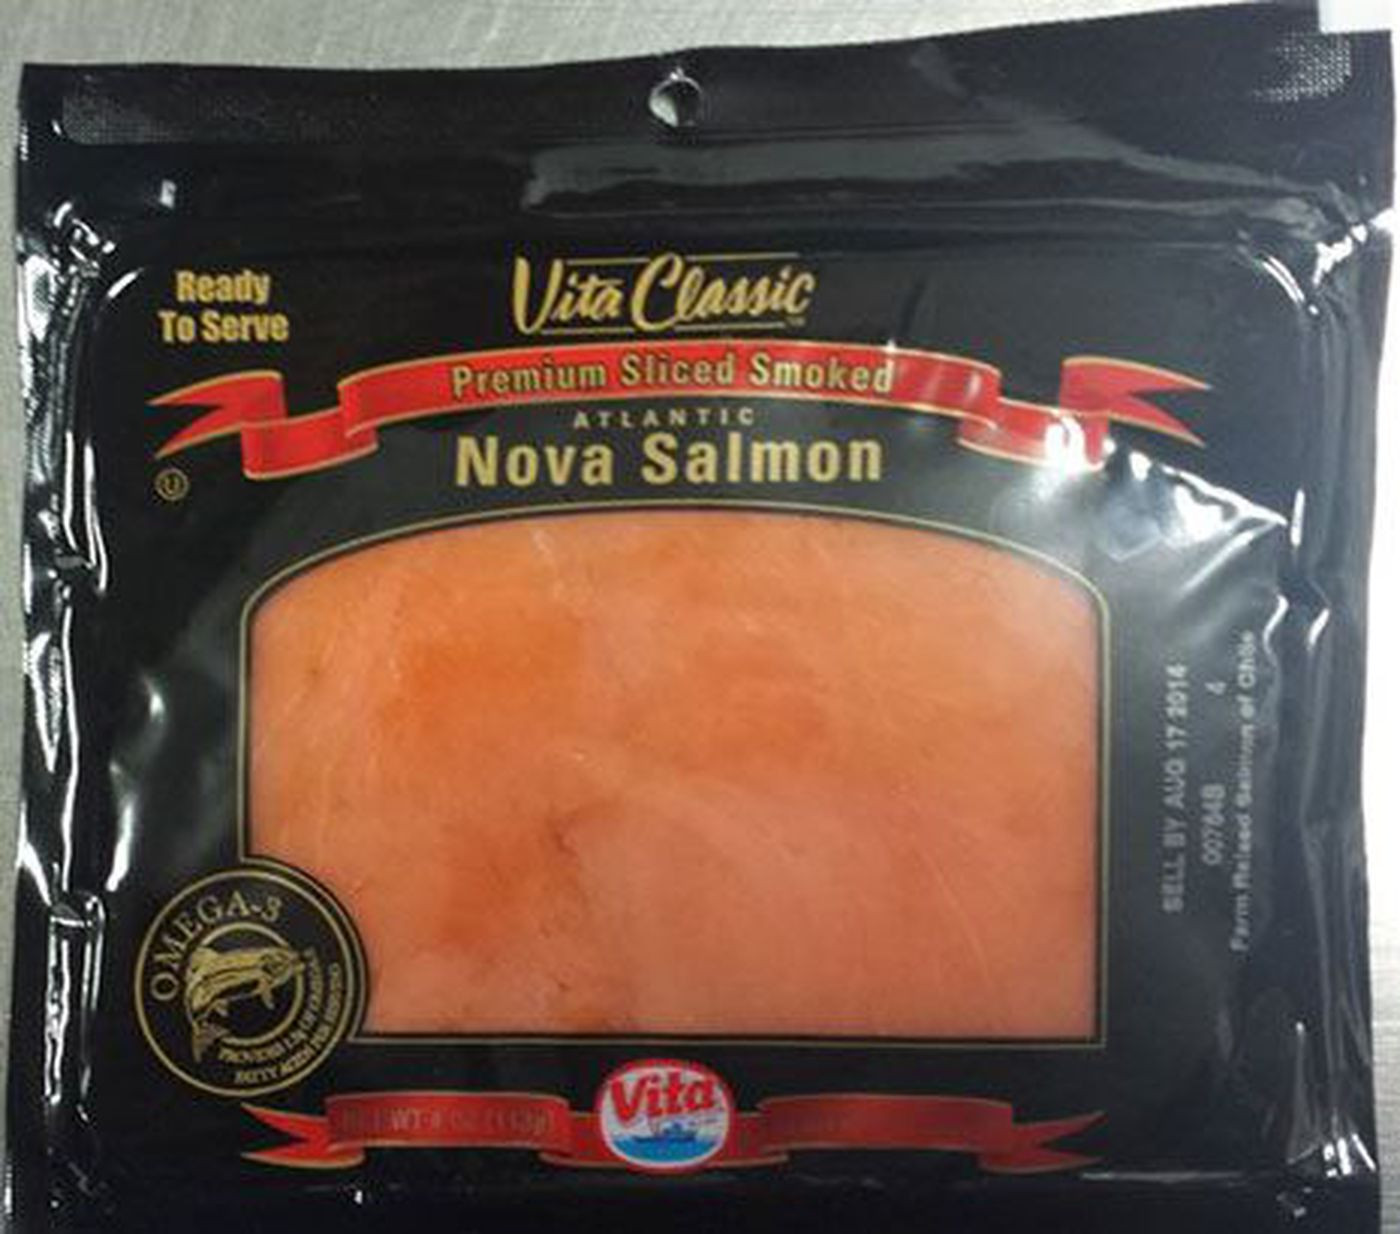 Smoked Salmon Publix
 Smoked salmon sold at Publix recalled